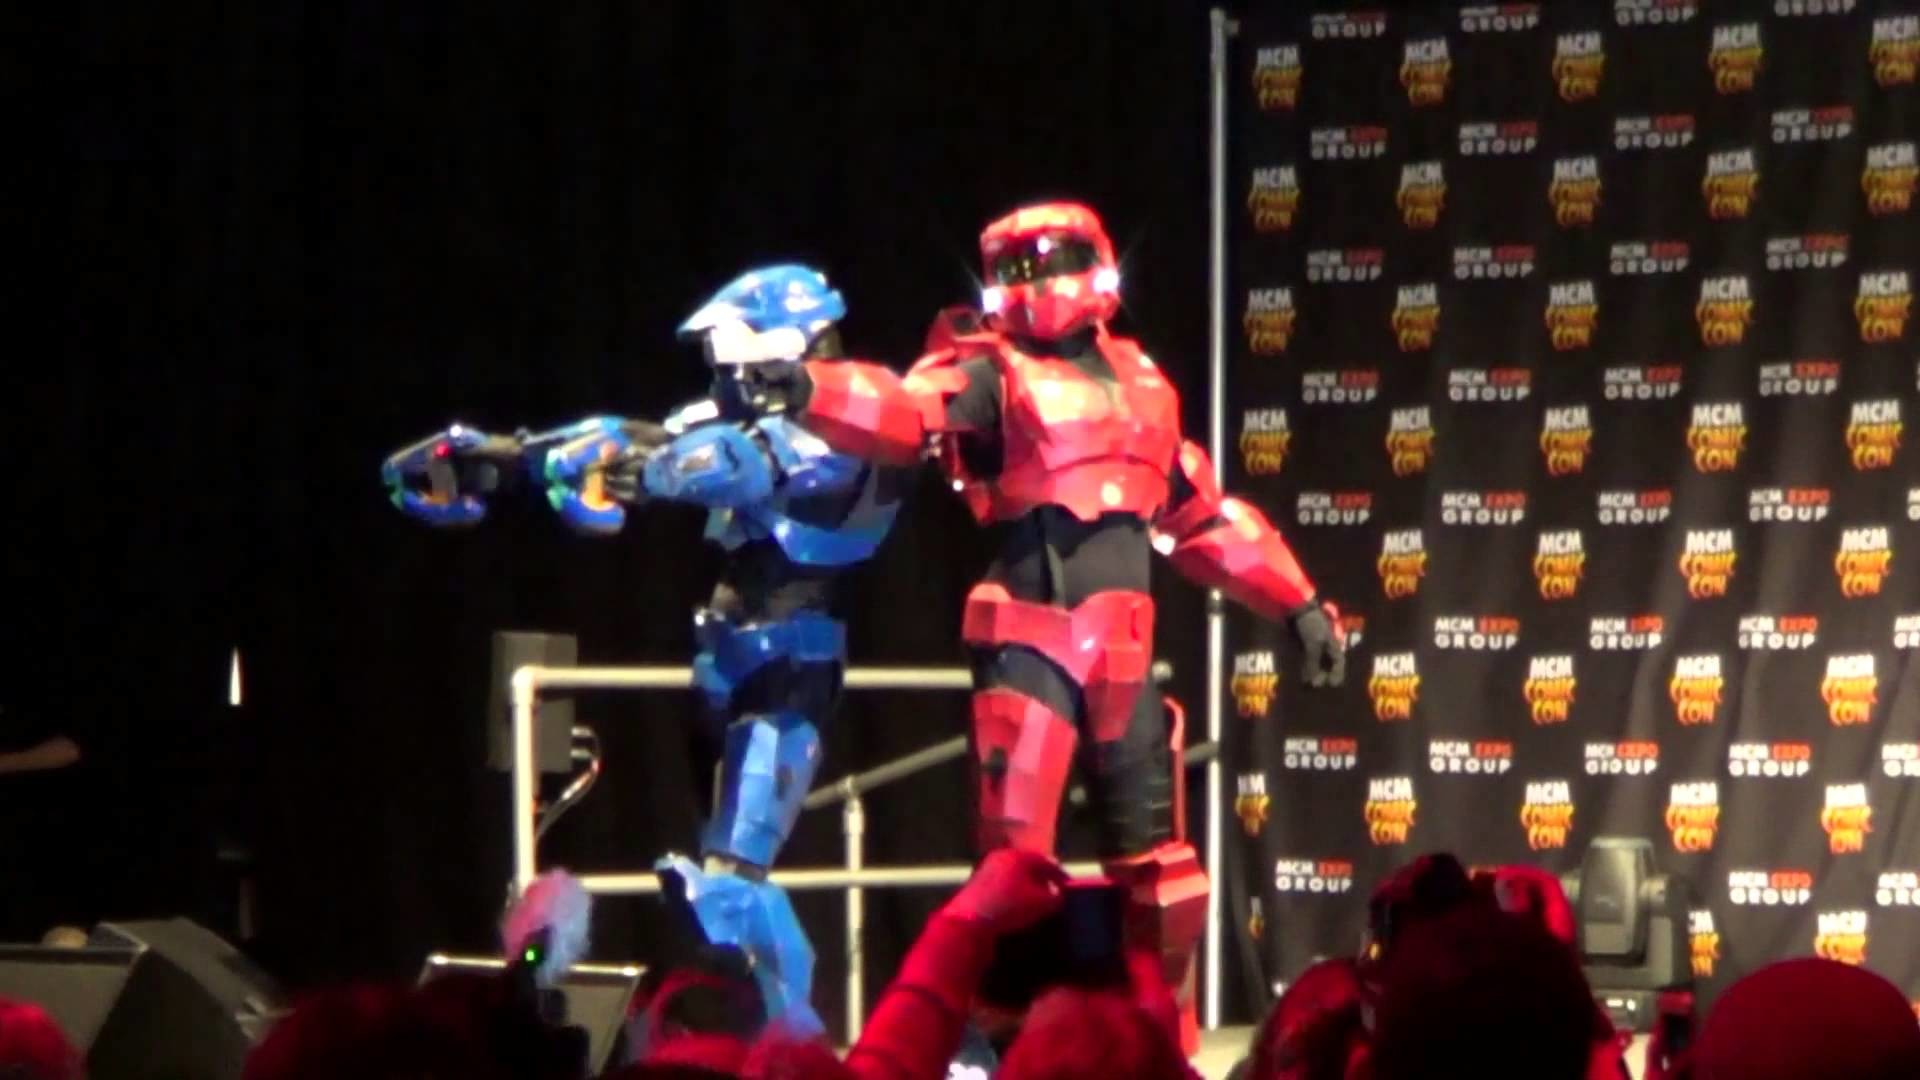 1920x1080 Red Vs. Blue (Halo 3) - Saturday Cosplay Masquerade - MCM London Comic Con  May 2013 - YouTube